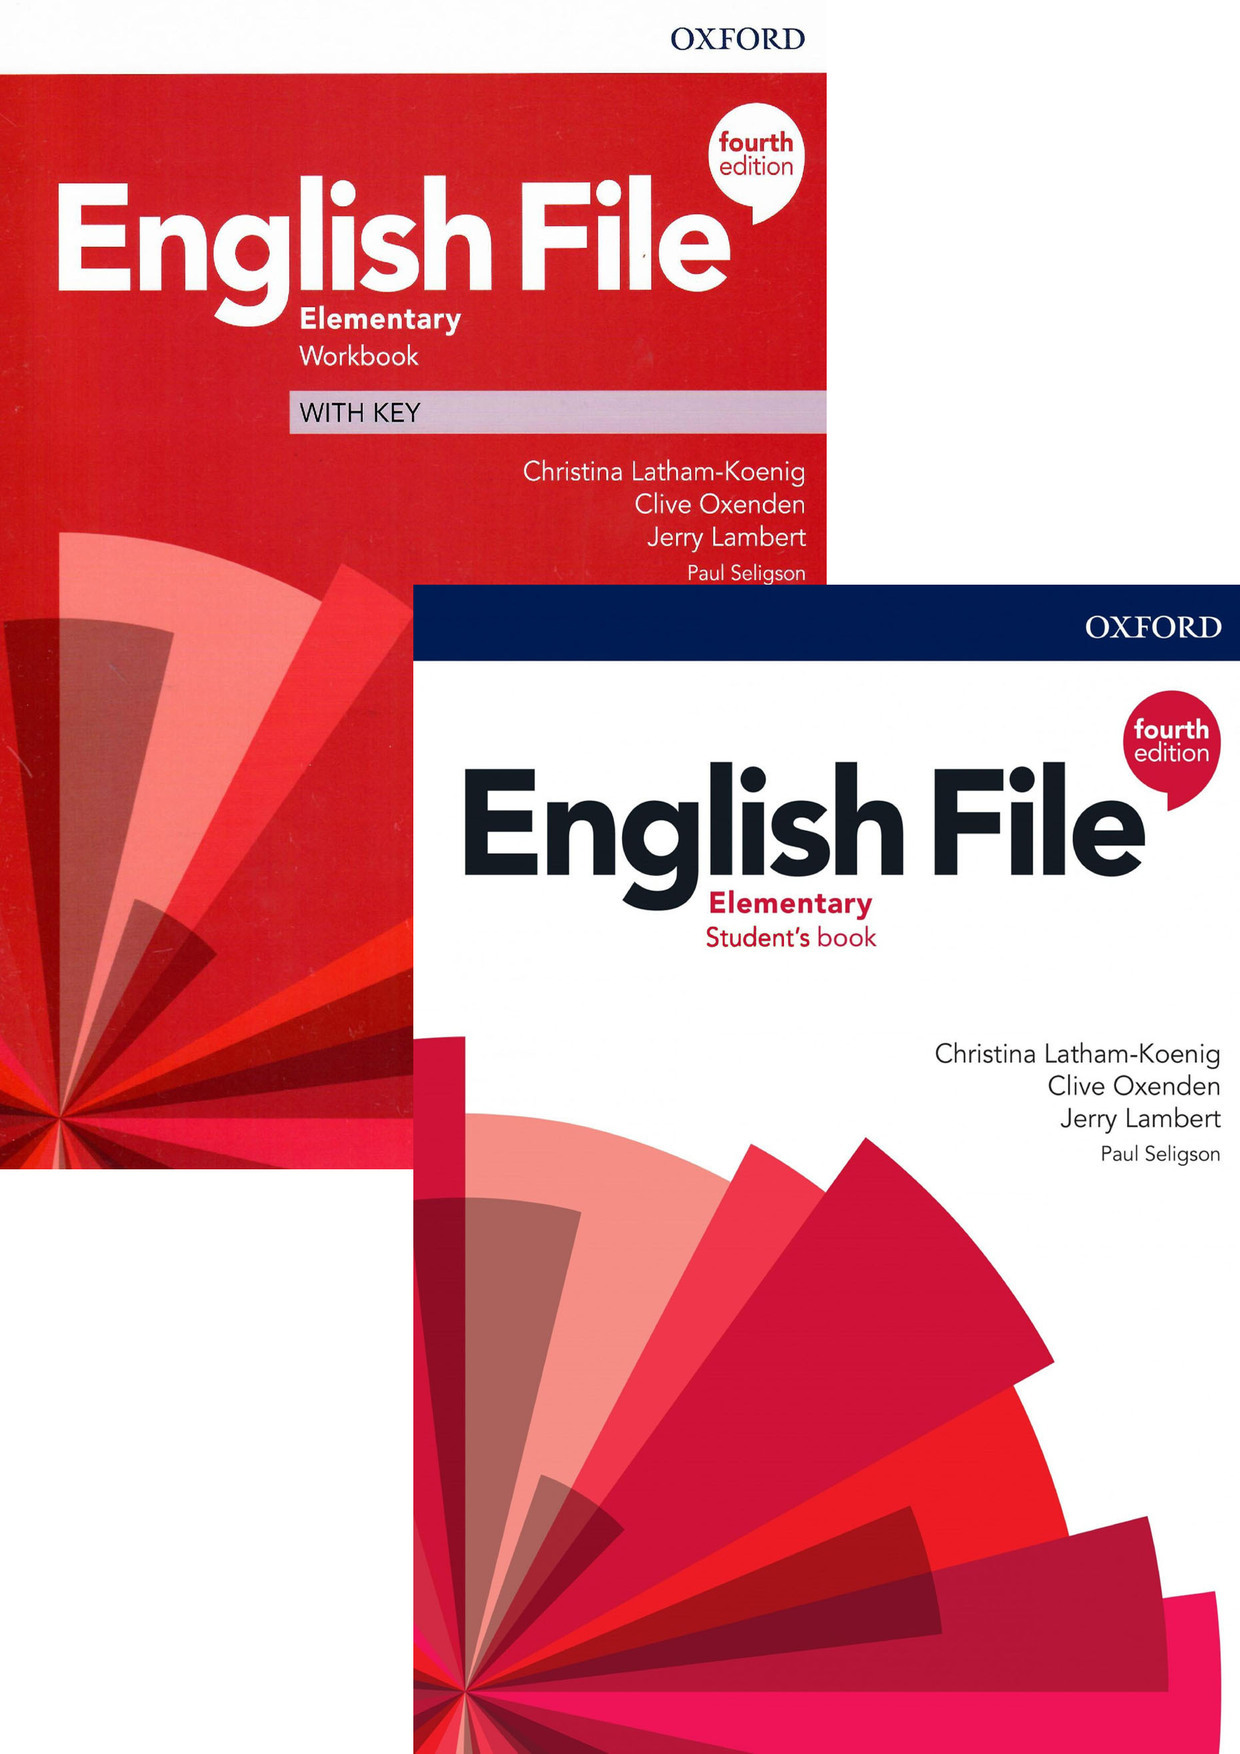 Ef elementary. English file Elementary 4th Edition. English file 4th Edition Elementary ответы. English file Elementary Workbook 4th Edition. English file 4th Edition.